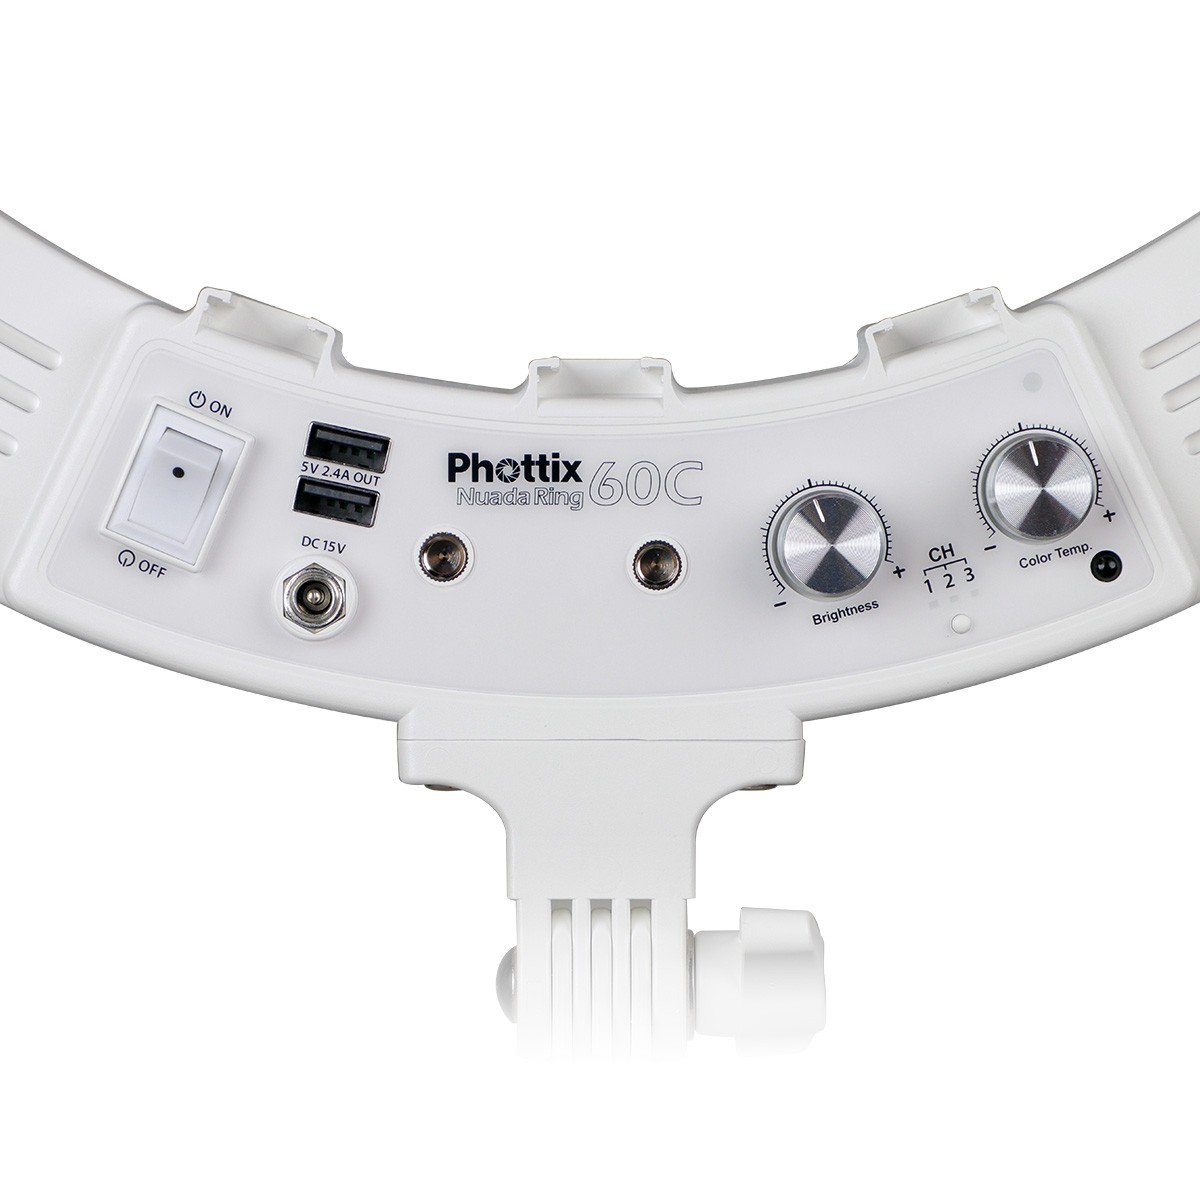 Phottix Nuada Ring60C LED Light - Phottix 日本正規総代理店 株式 